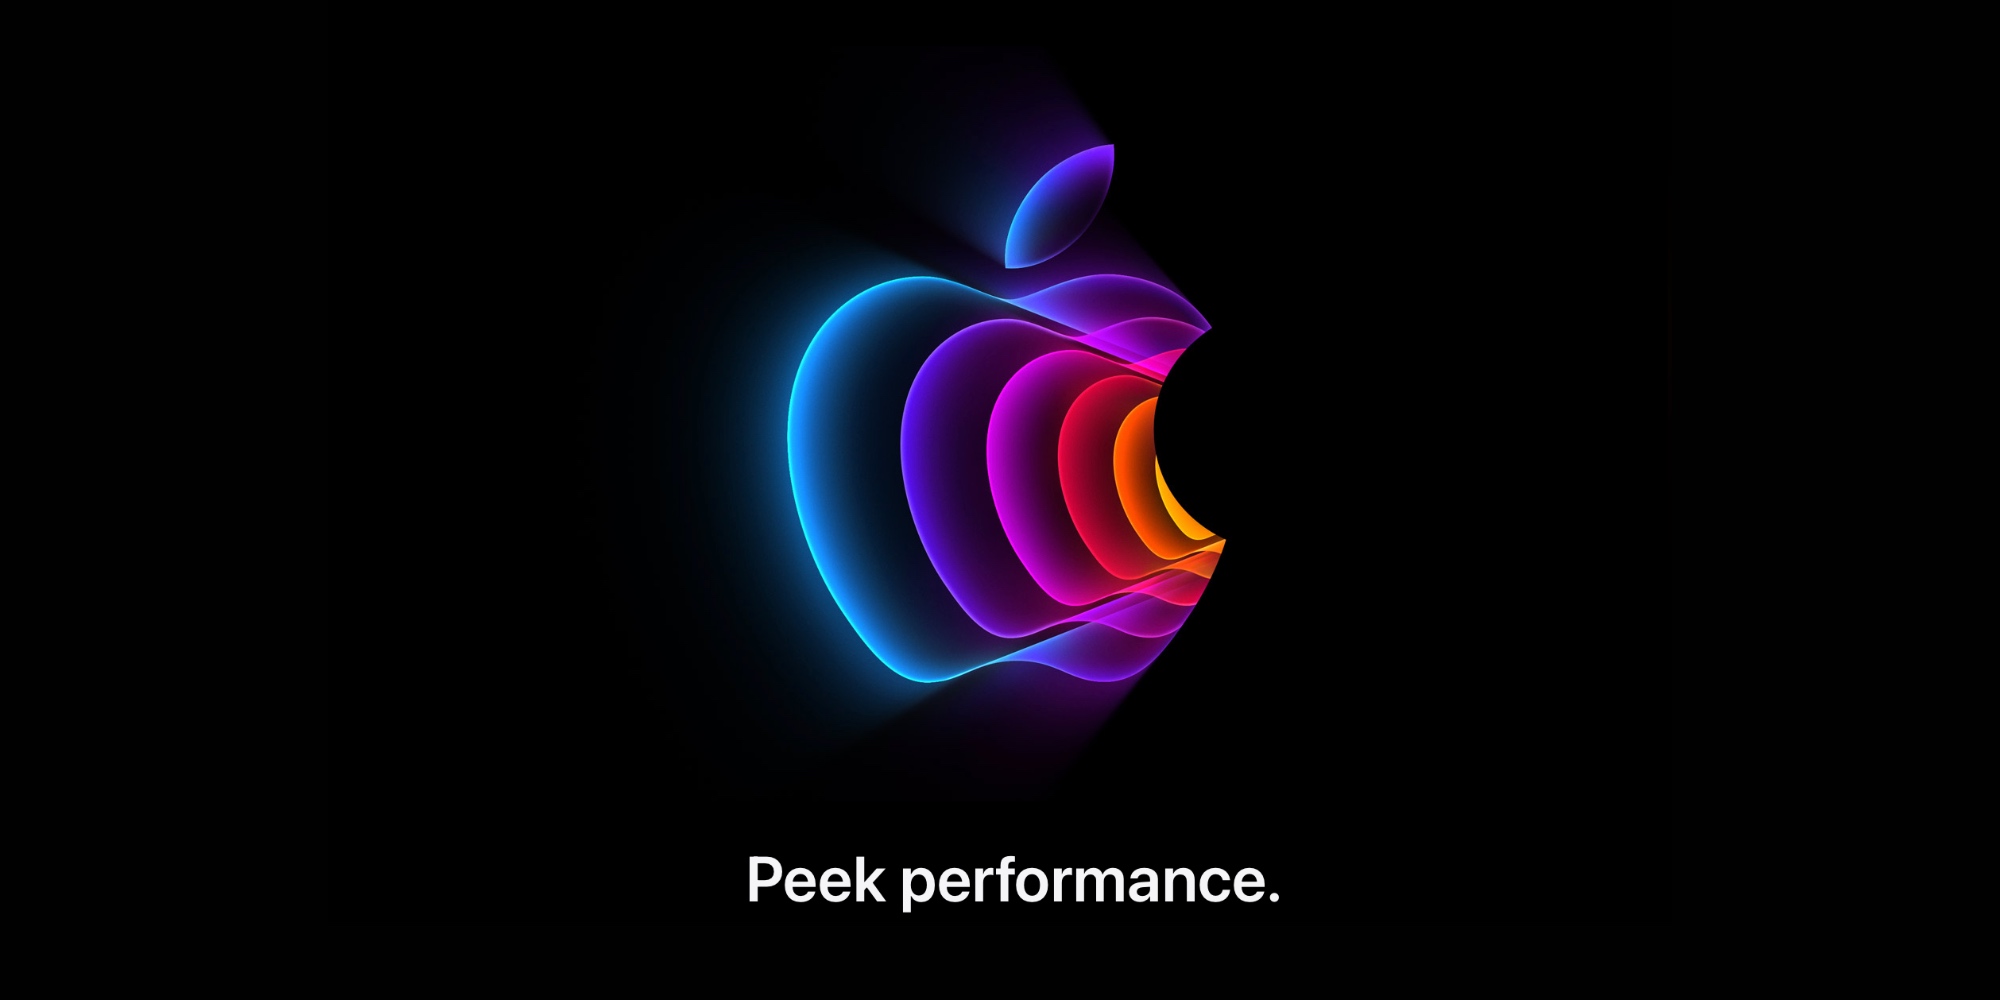 peek-performance-evento-da-apple-marco-nova-post